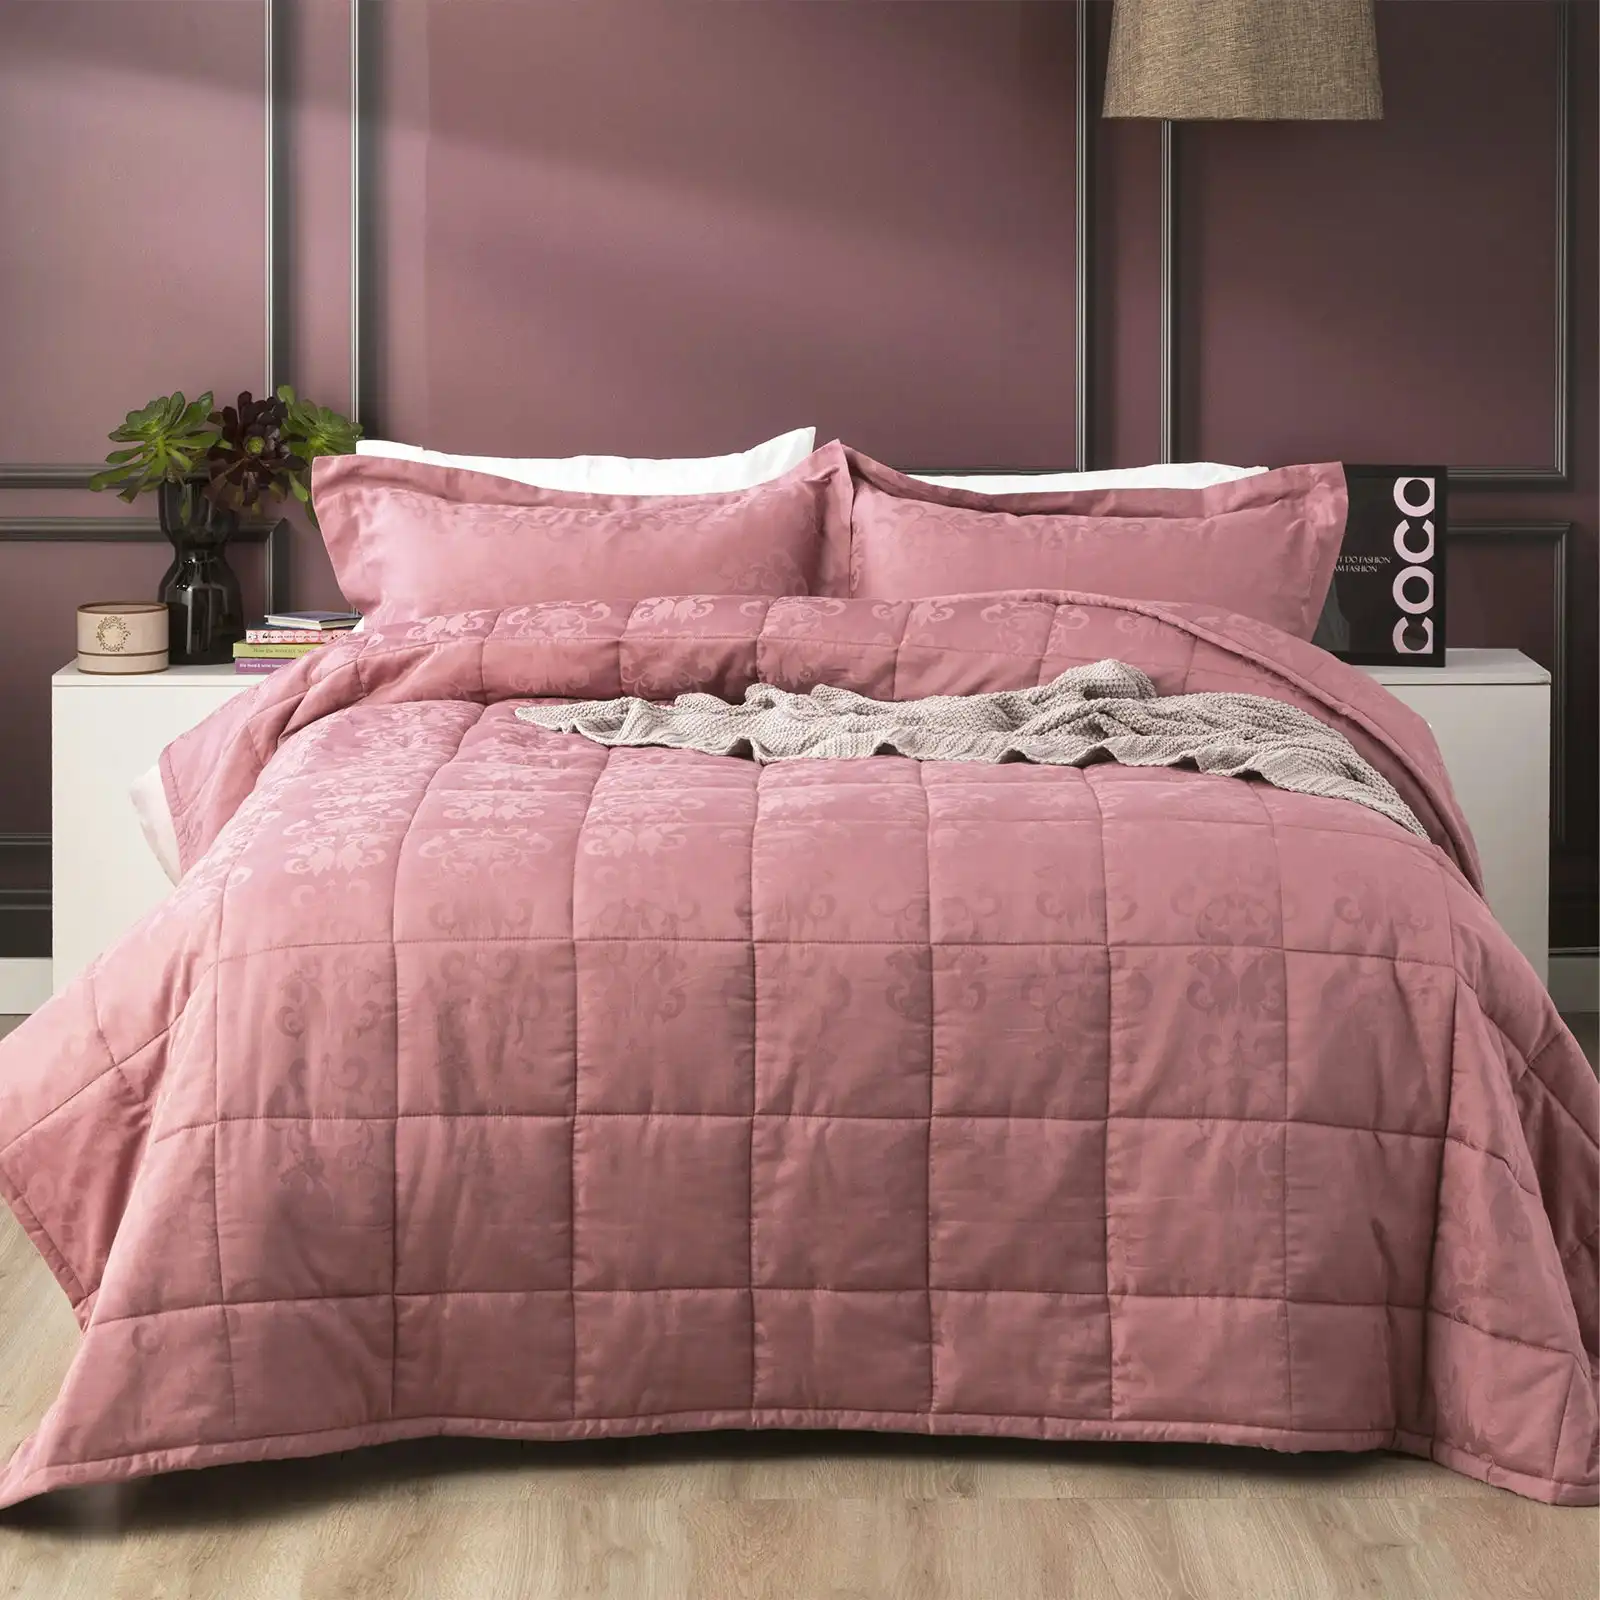 Ddecor Home Paisley King Bed Comforter Set 500TC Cotton Jacquard Bedding Rose